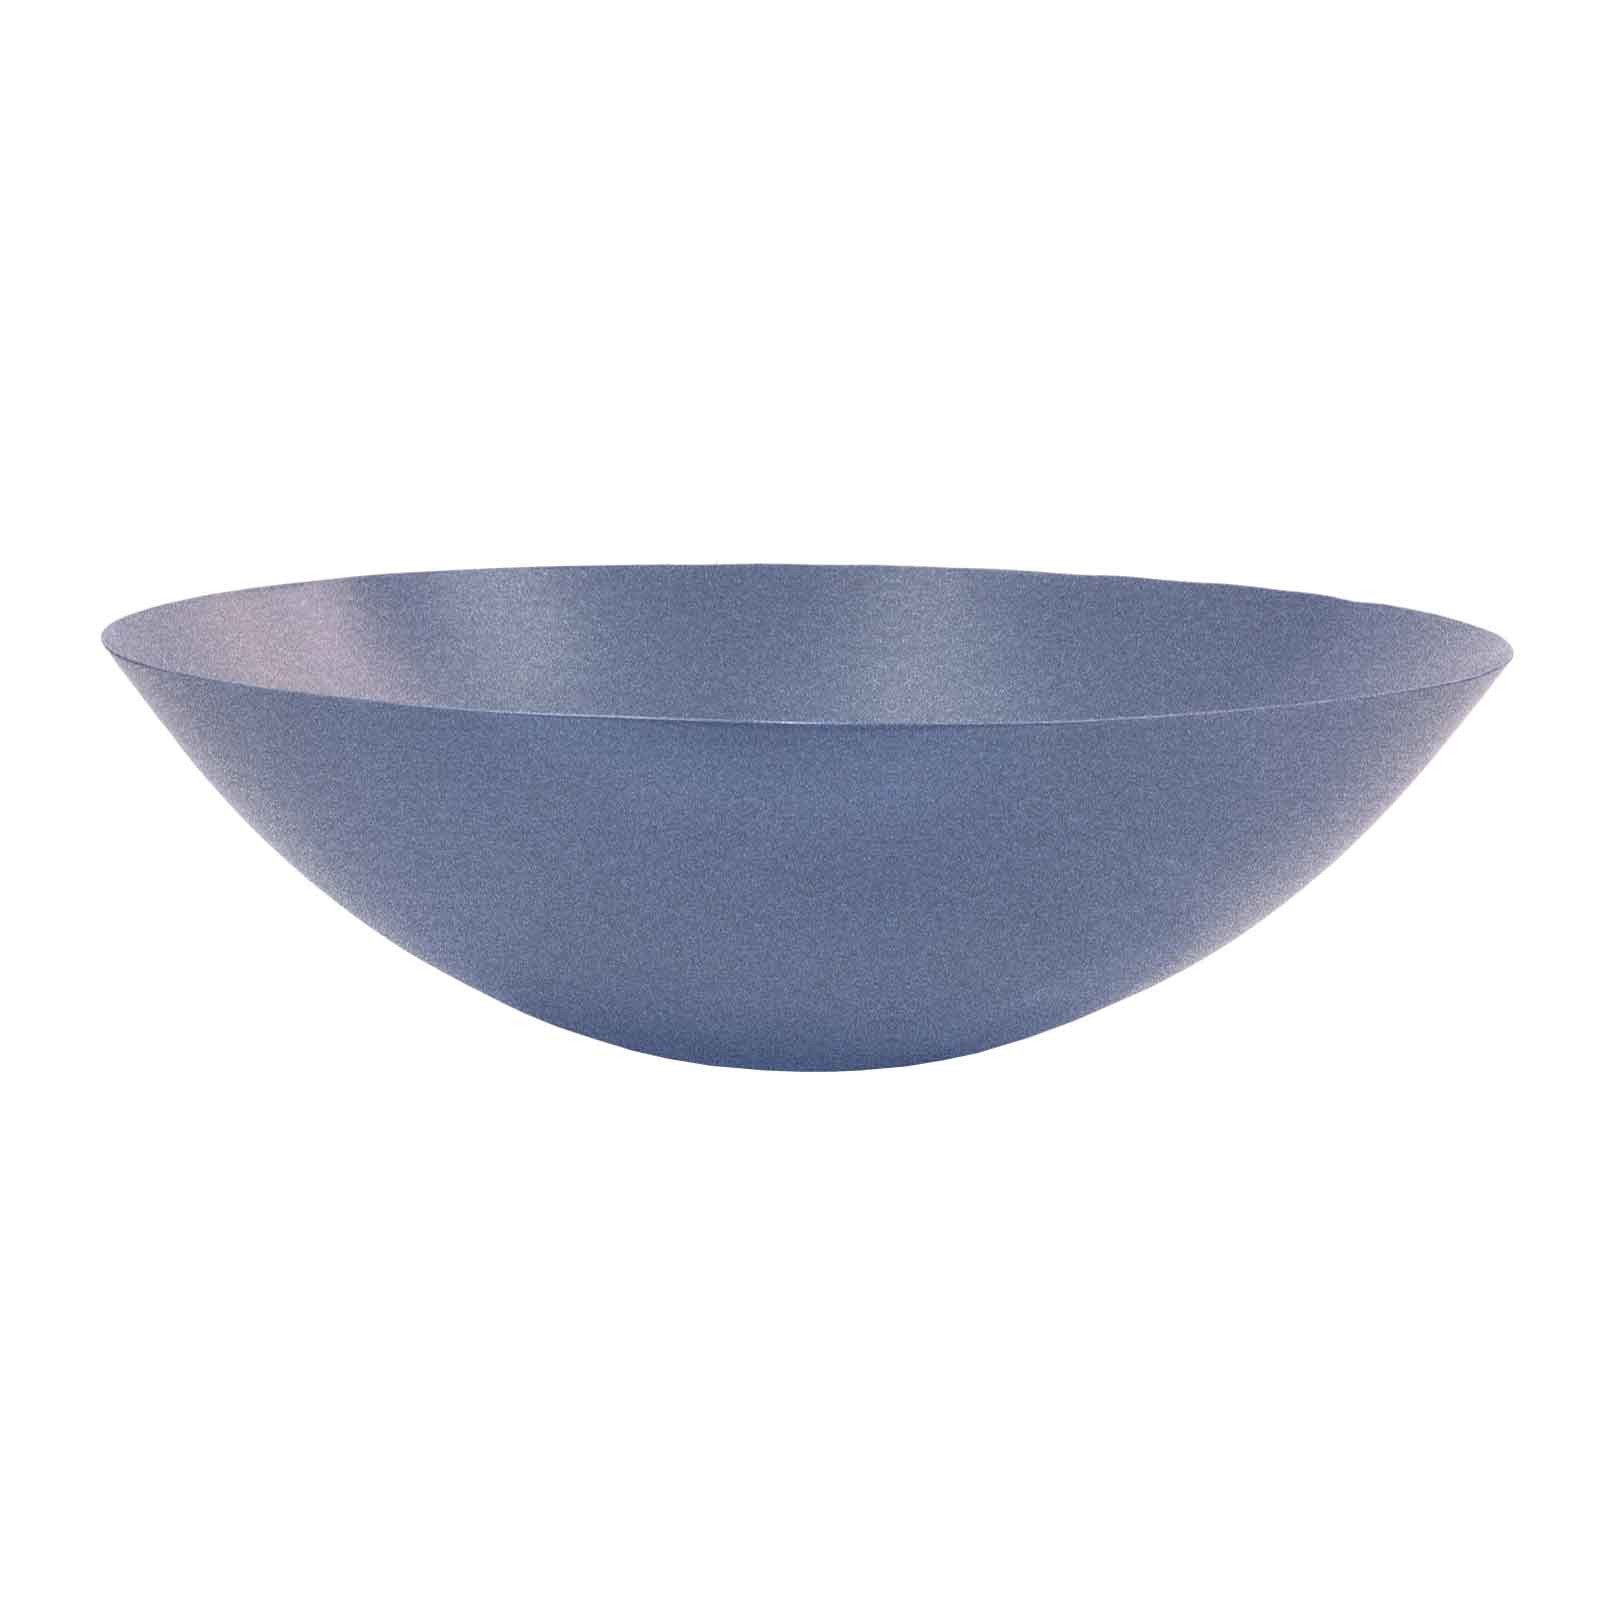 Oso Large Polar Aluminum Bowl